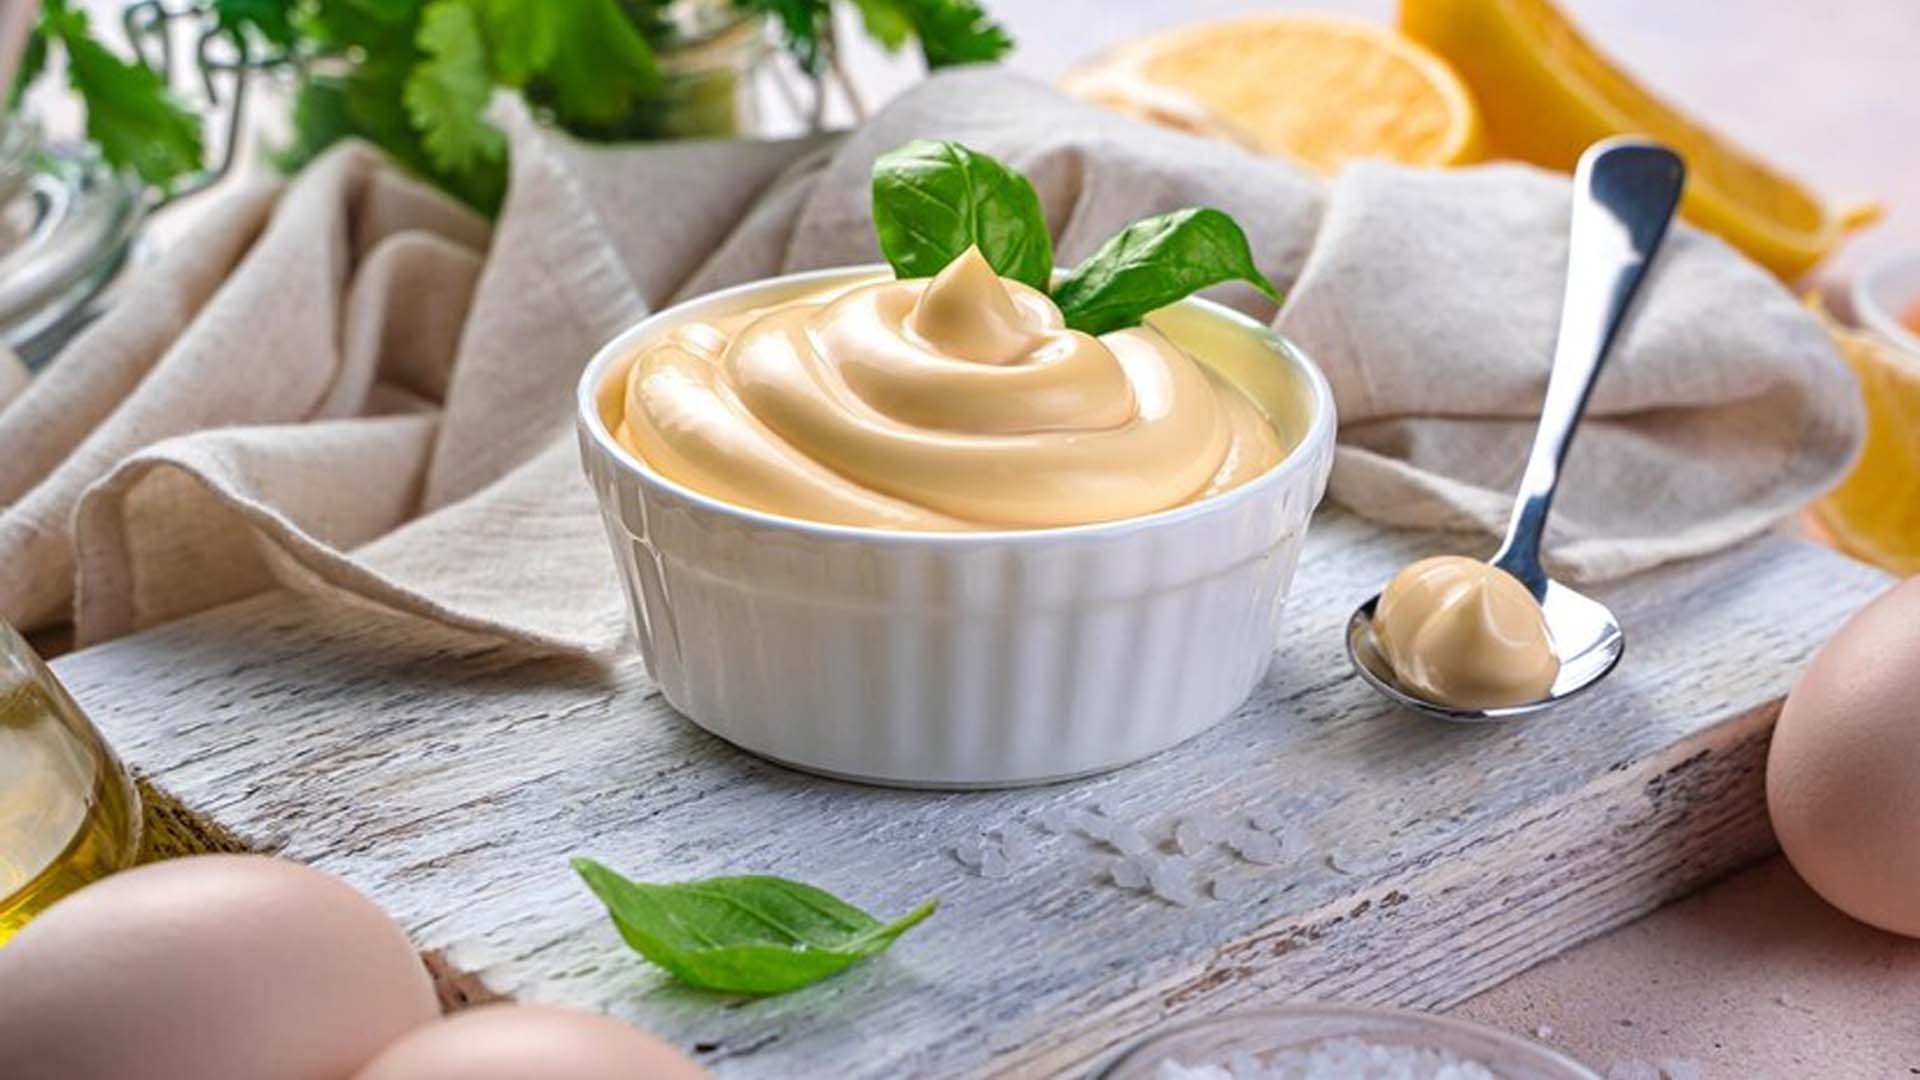 Is Mayonnaise Good For Health?